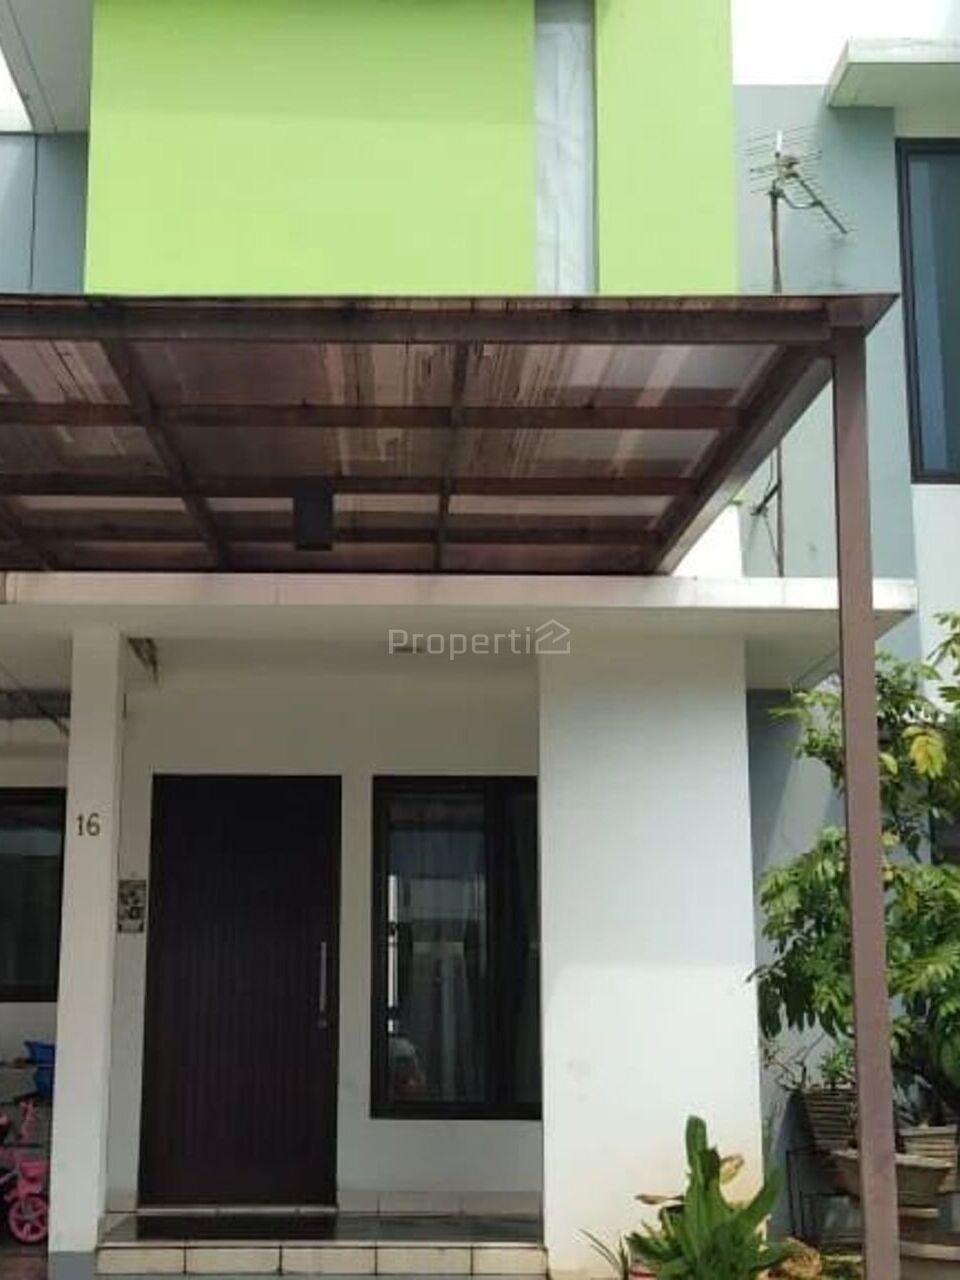 2 Storey House in Setu, Cipayung, East Jakarta, DKI Jakarta